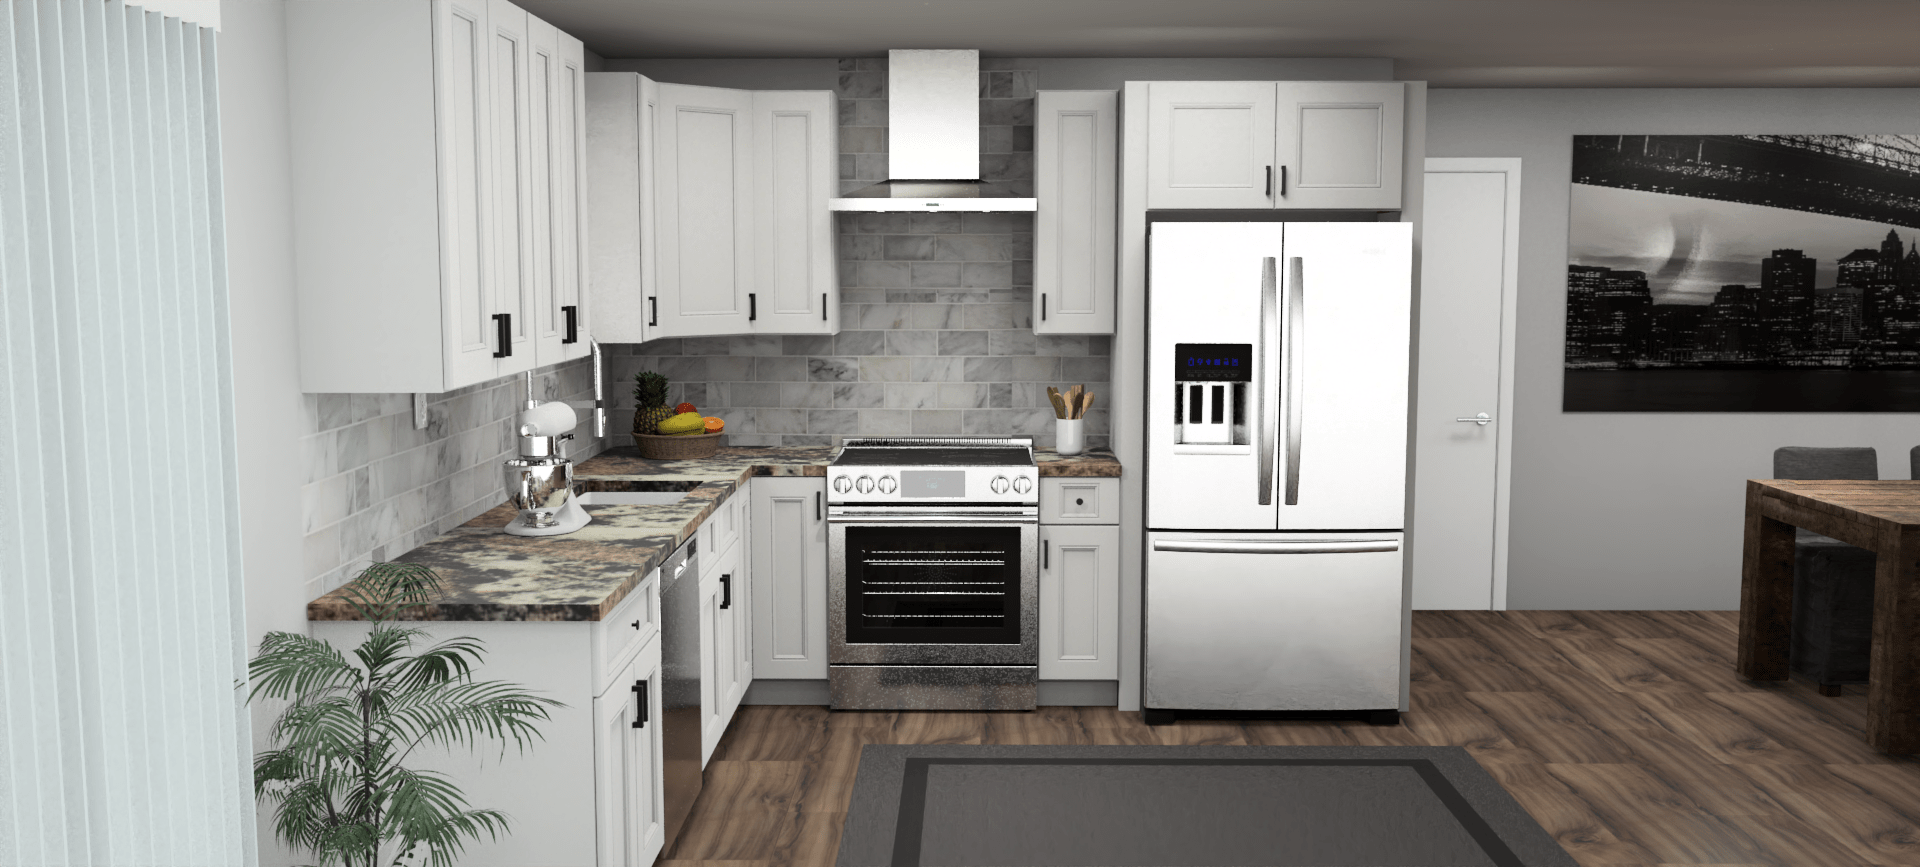 Fabuwood Allure Nexus Frost 10 x 10 L Shaped Kitchen Front Layout Photo